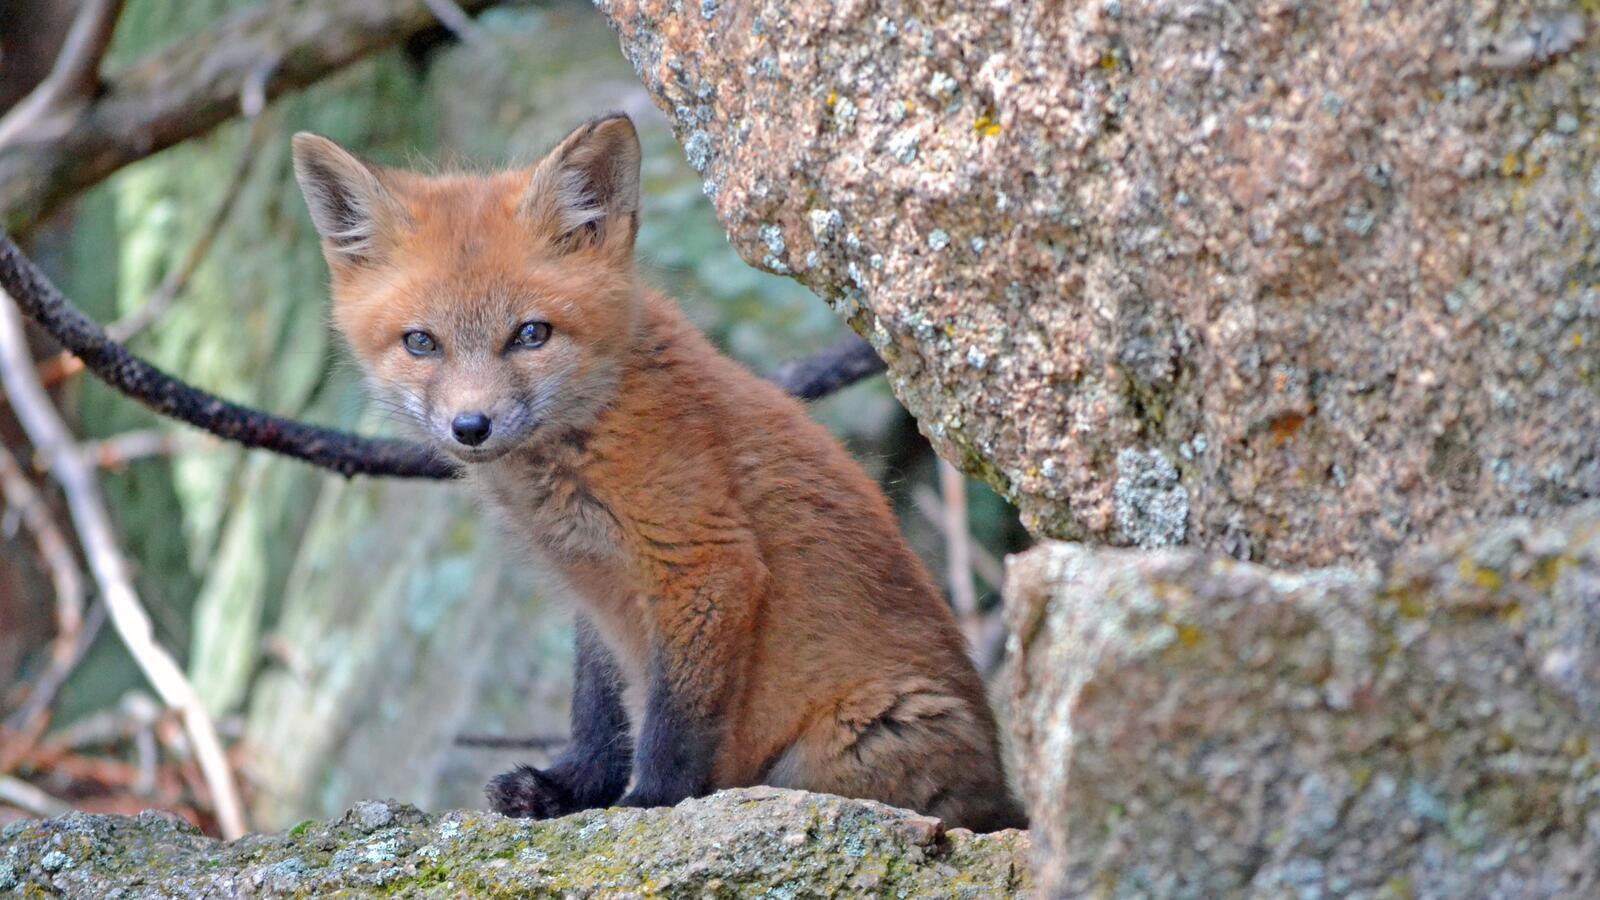 Wallpapers wildlife fox fauna on the desktop